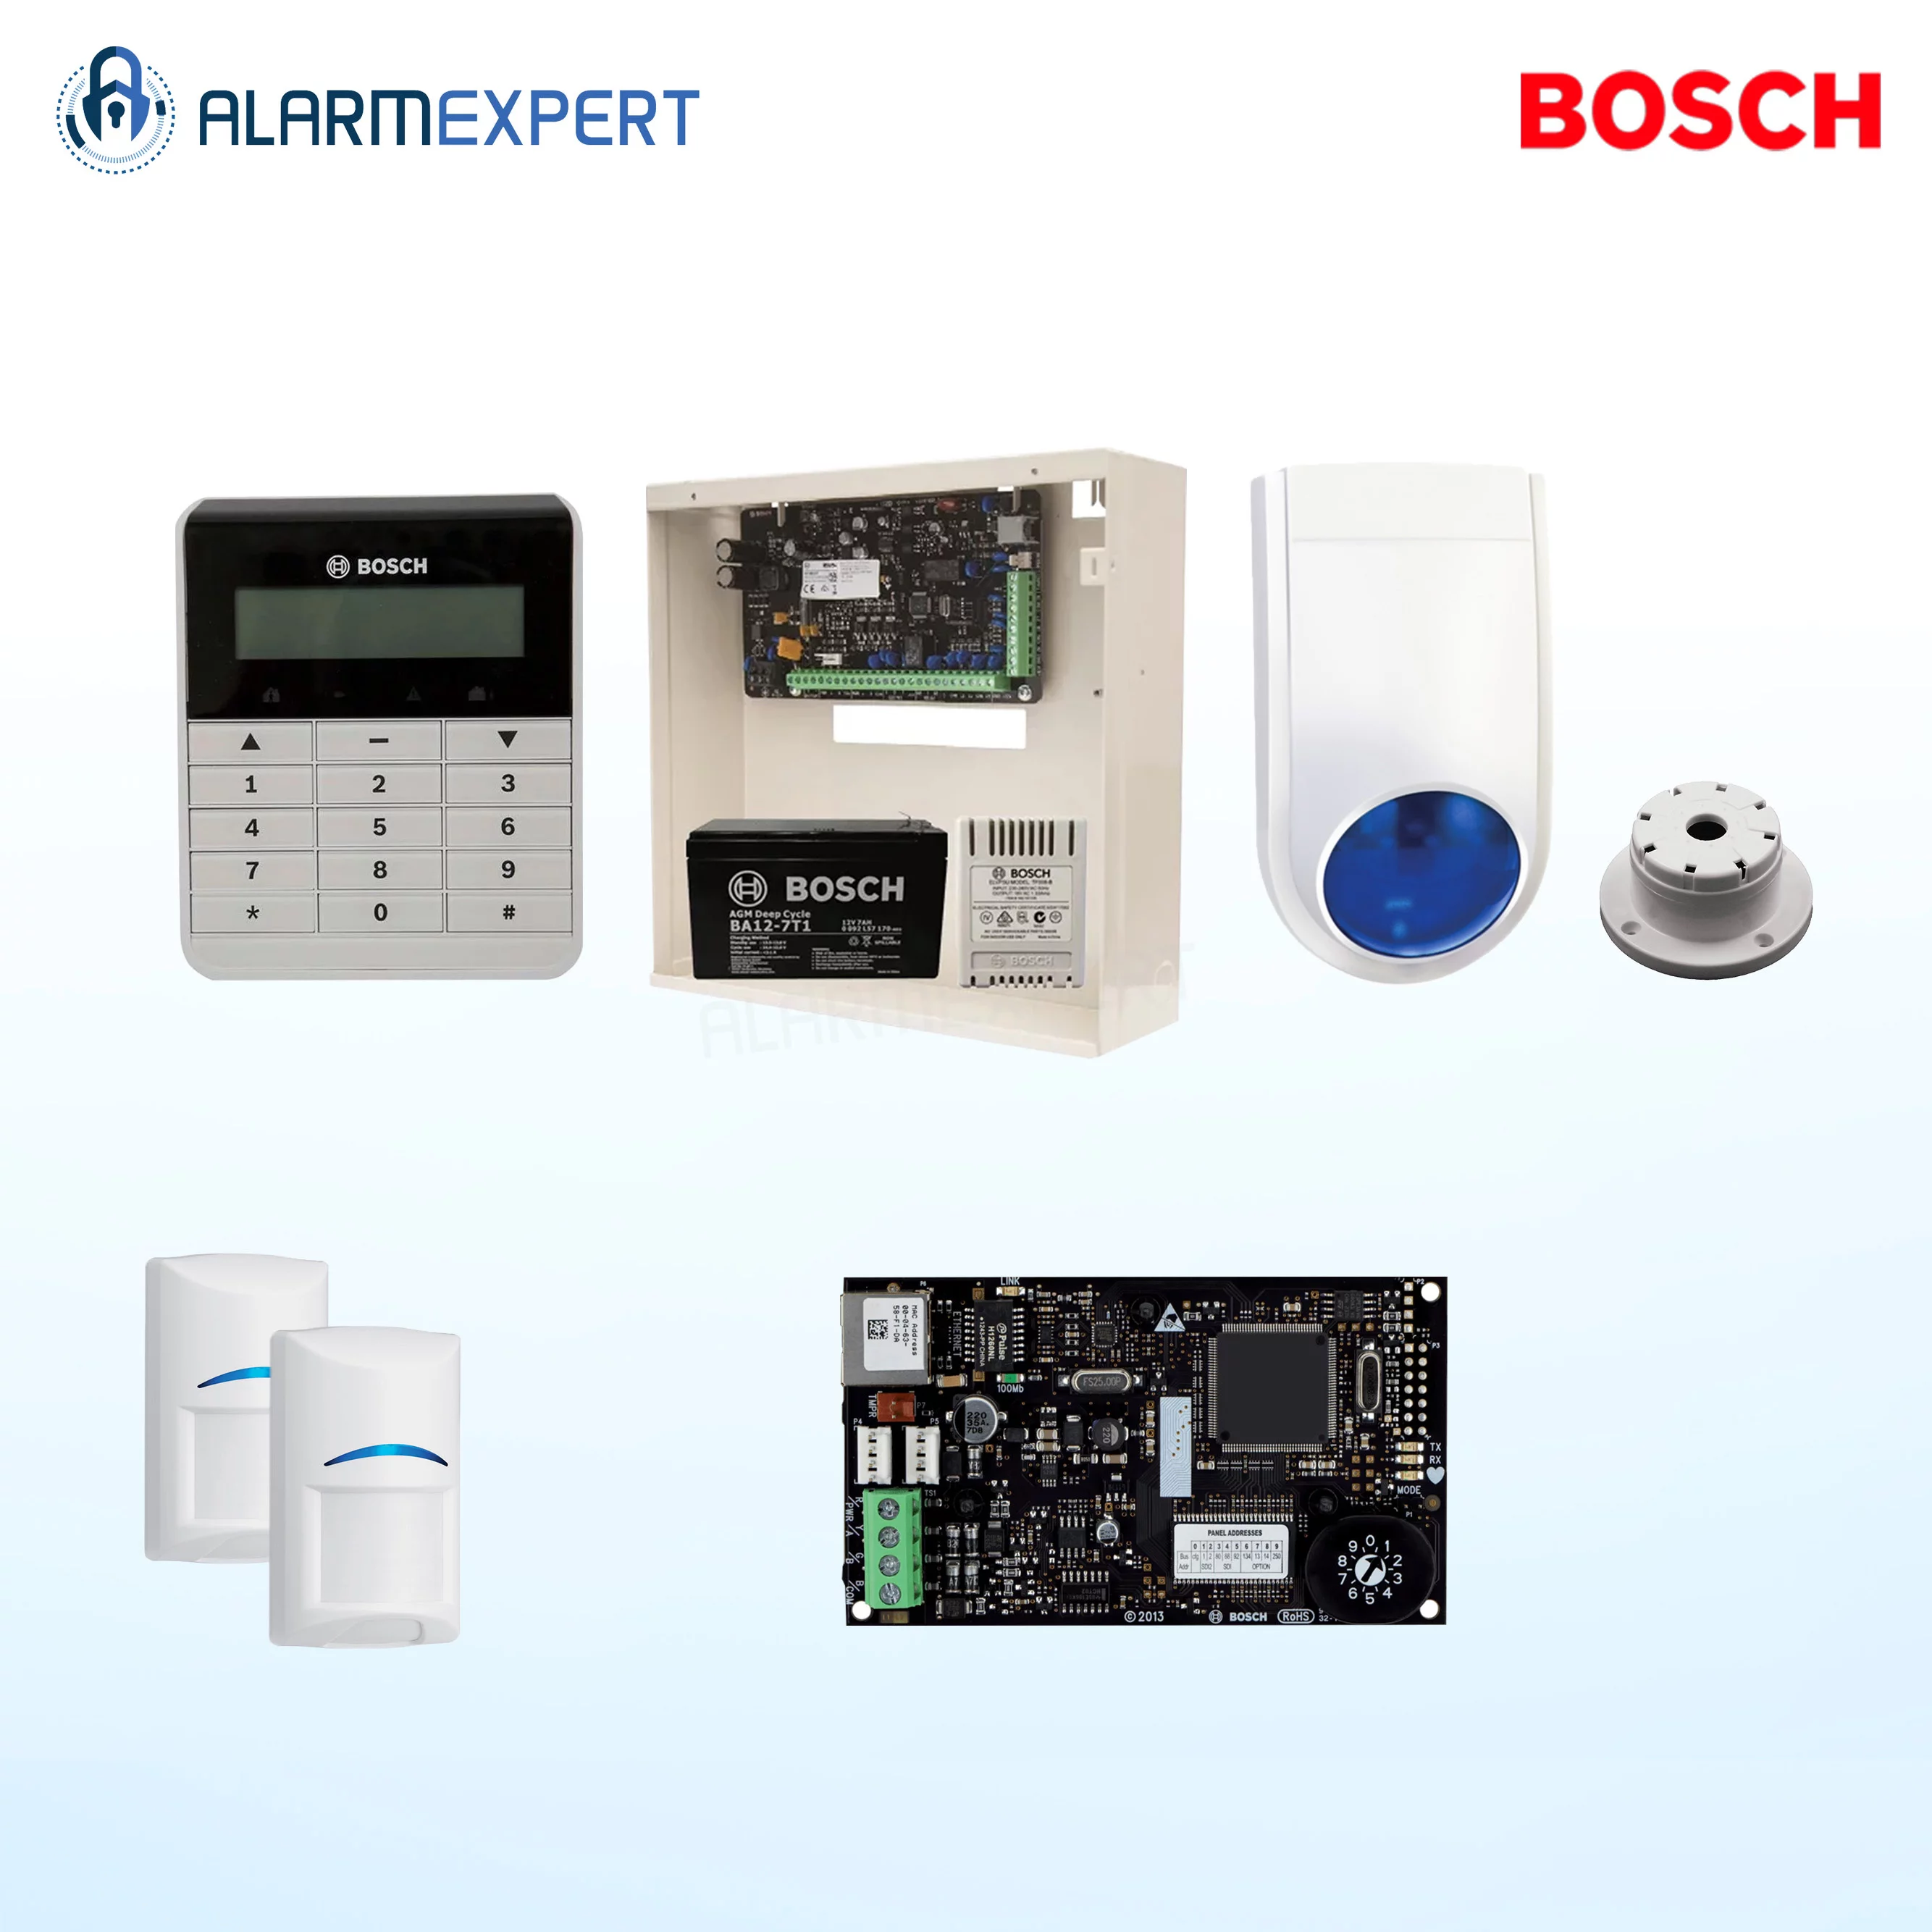 Bosch Solution 2000 IP + 2 PIRs + Text Keypad